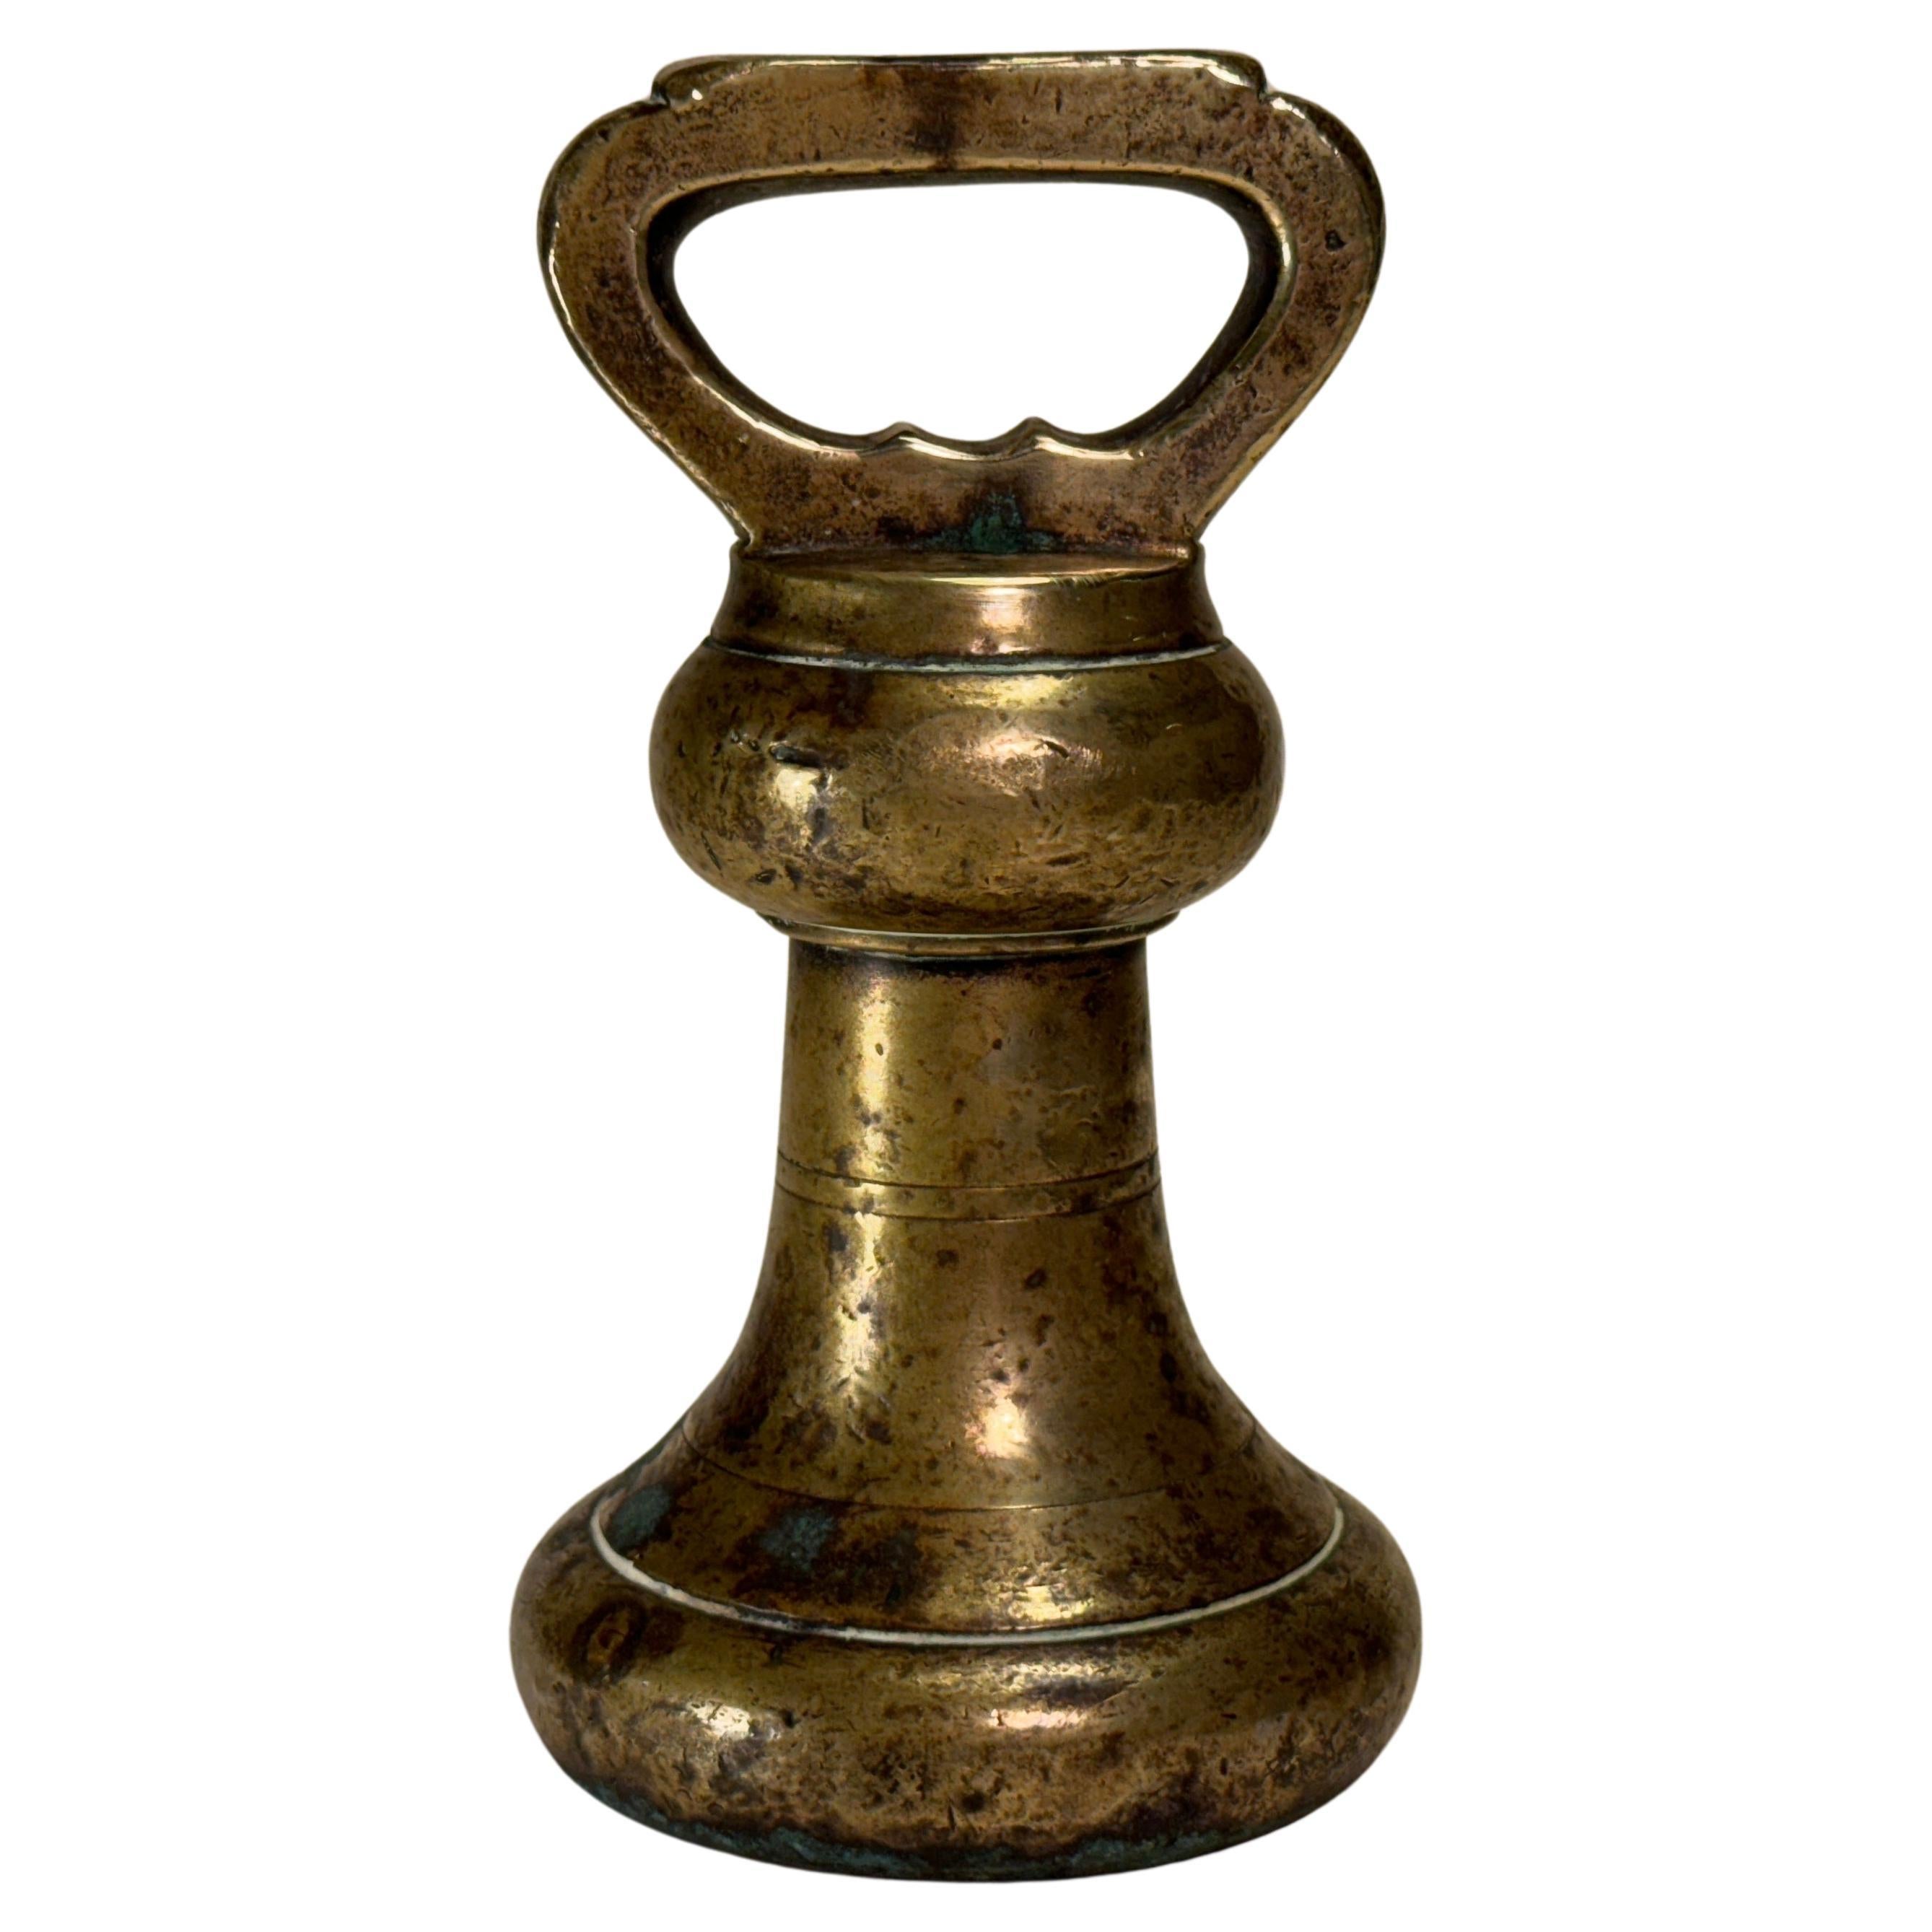 Large Antique Bronze Letter Glocke Gewicht oder Hantel 1 lbs.

